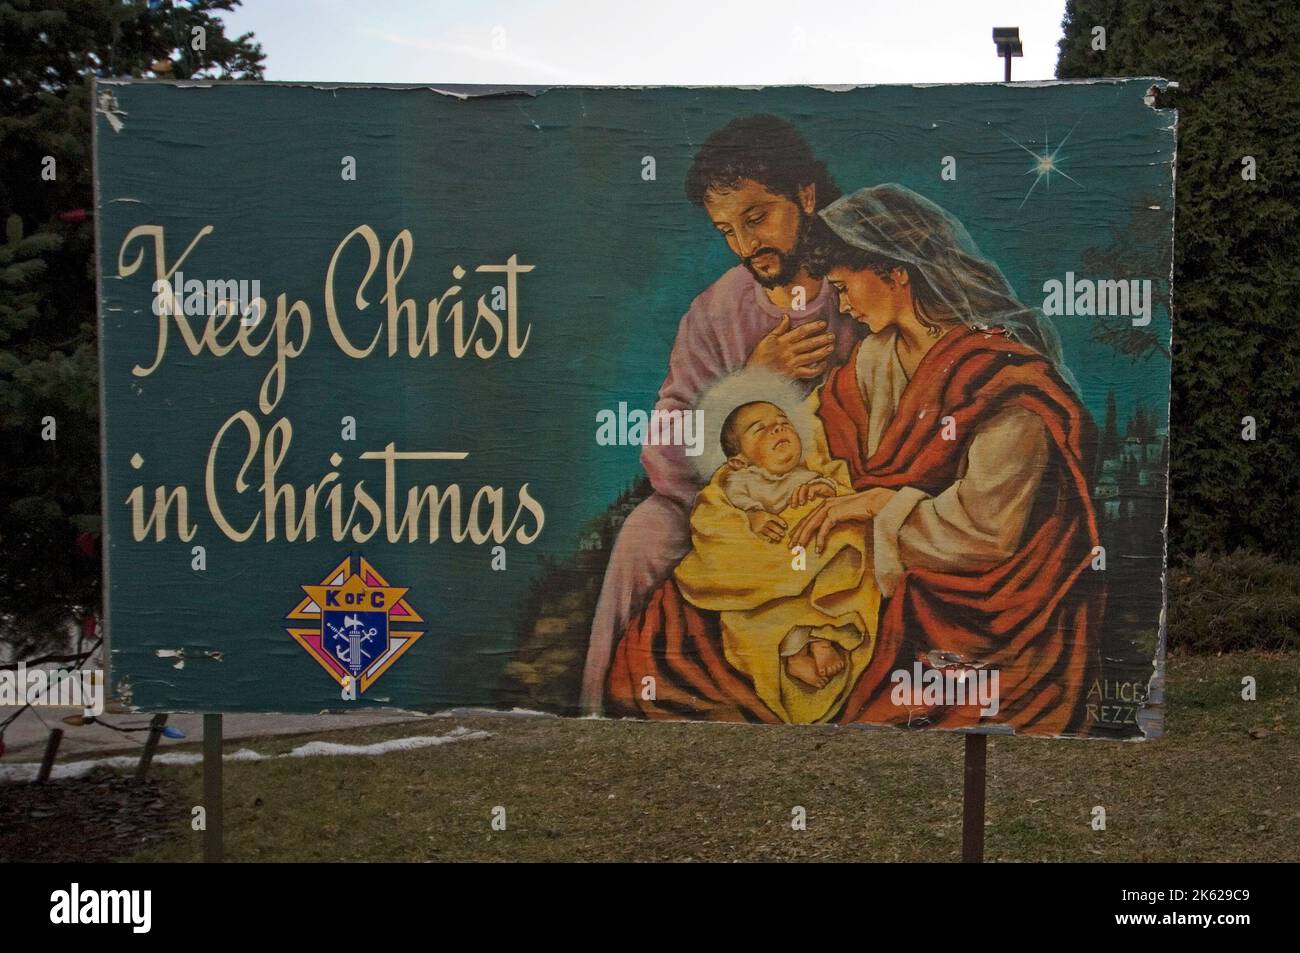 Keep Christ in Christmas placard Stock Photo